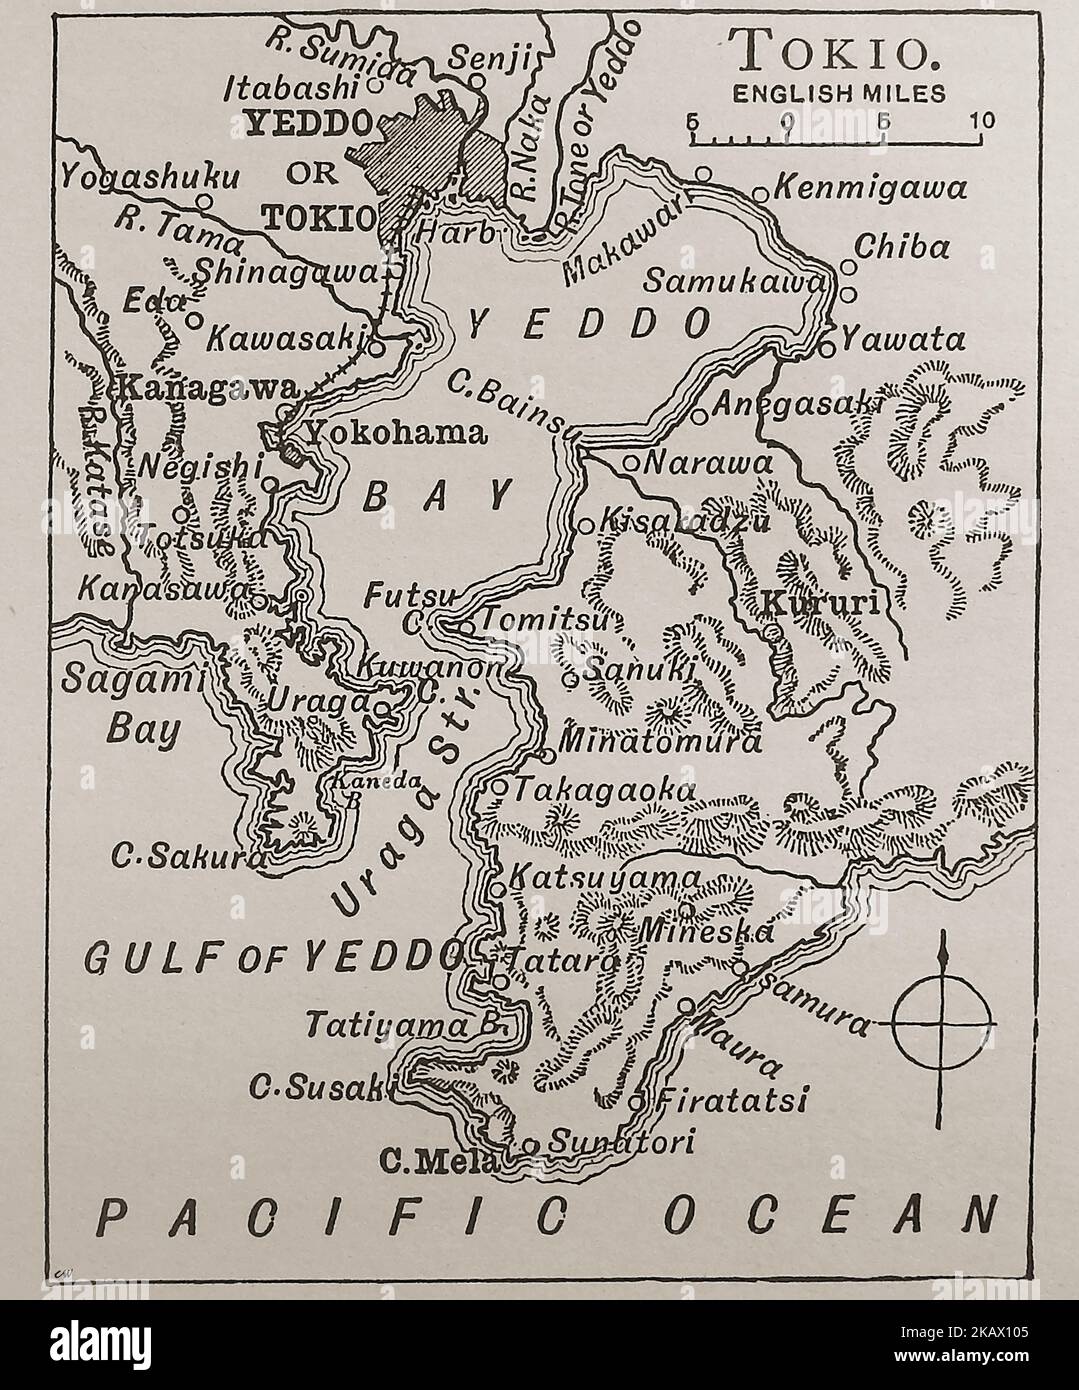 A late 19thcentury map of Yeddo Bay and Tokio, Japan.  ---   日本のイェド湾と東京の19世紀後半の地図。 Stock Photo